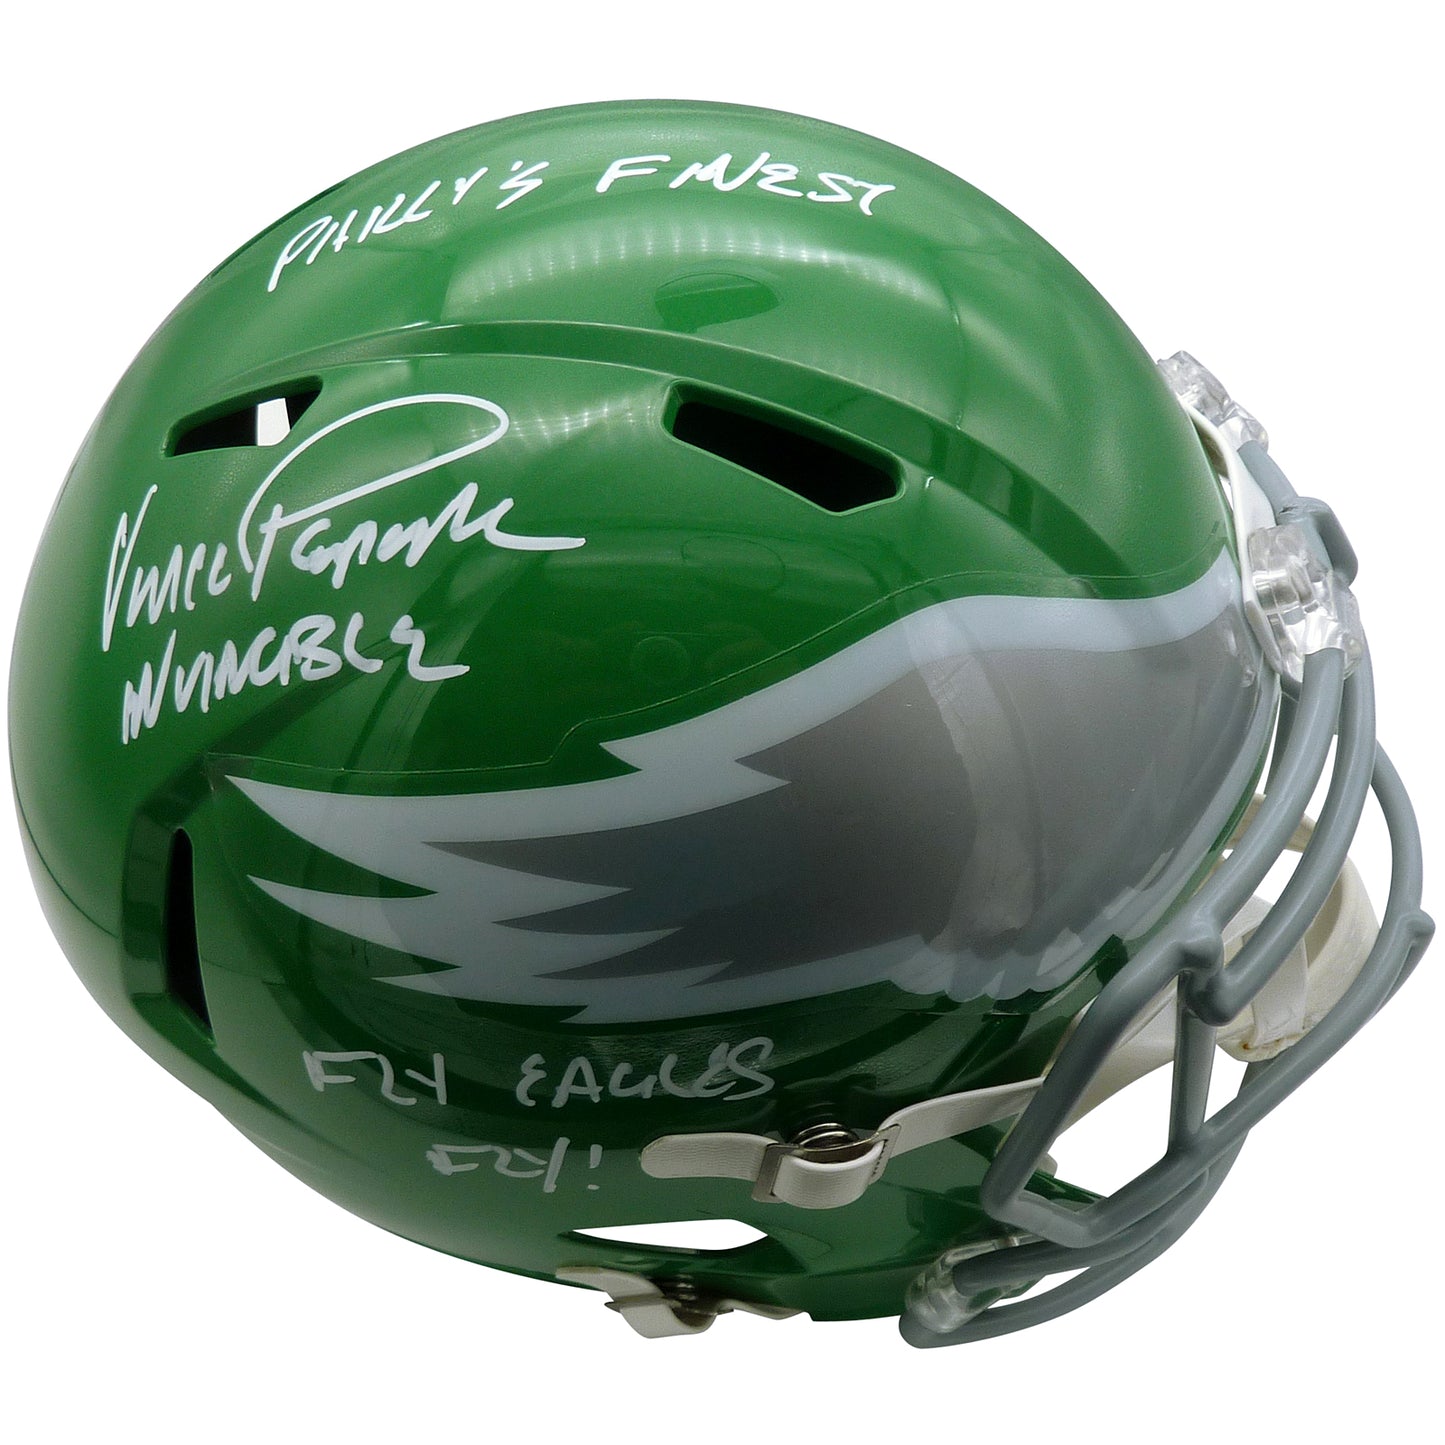 Vince Papale Autographed Philadelphia Eagles (Kelly Green) Deluxe Full-Size Replica Helmet w/ "Invincible" 3 Inscriptions - JSA